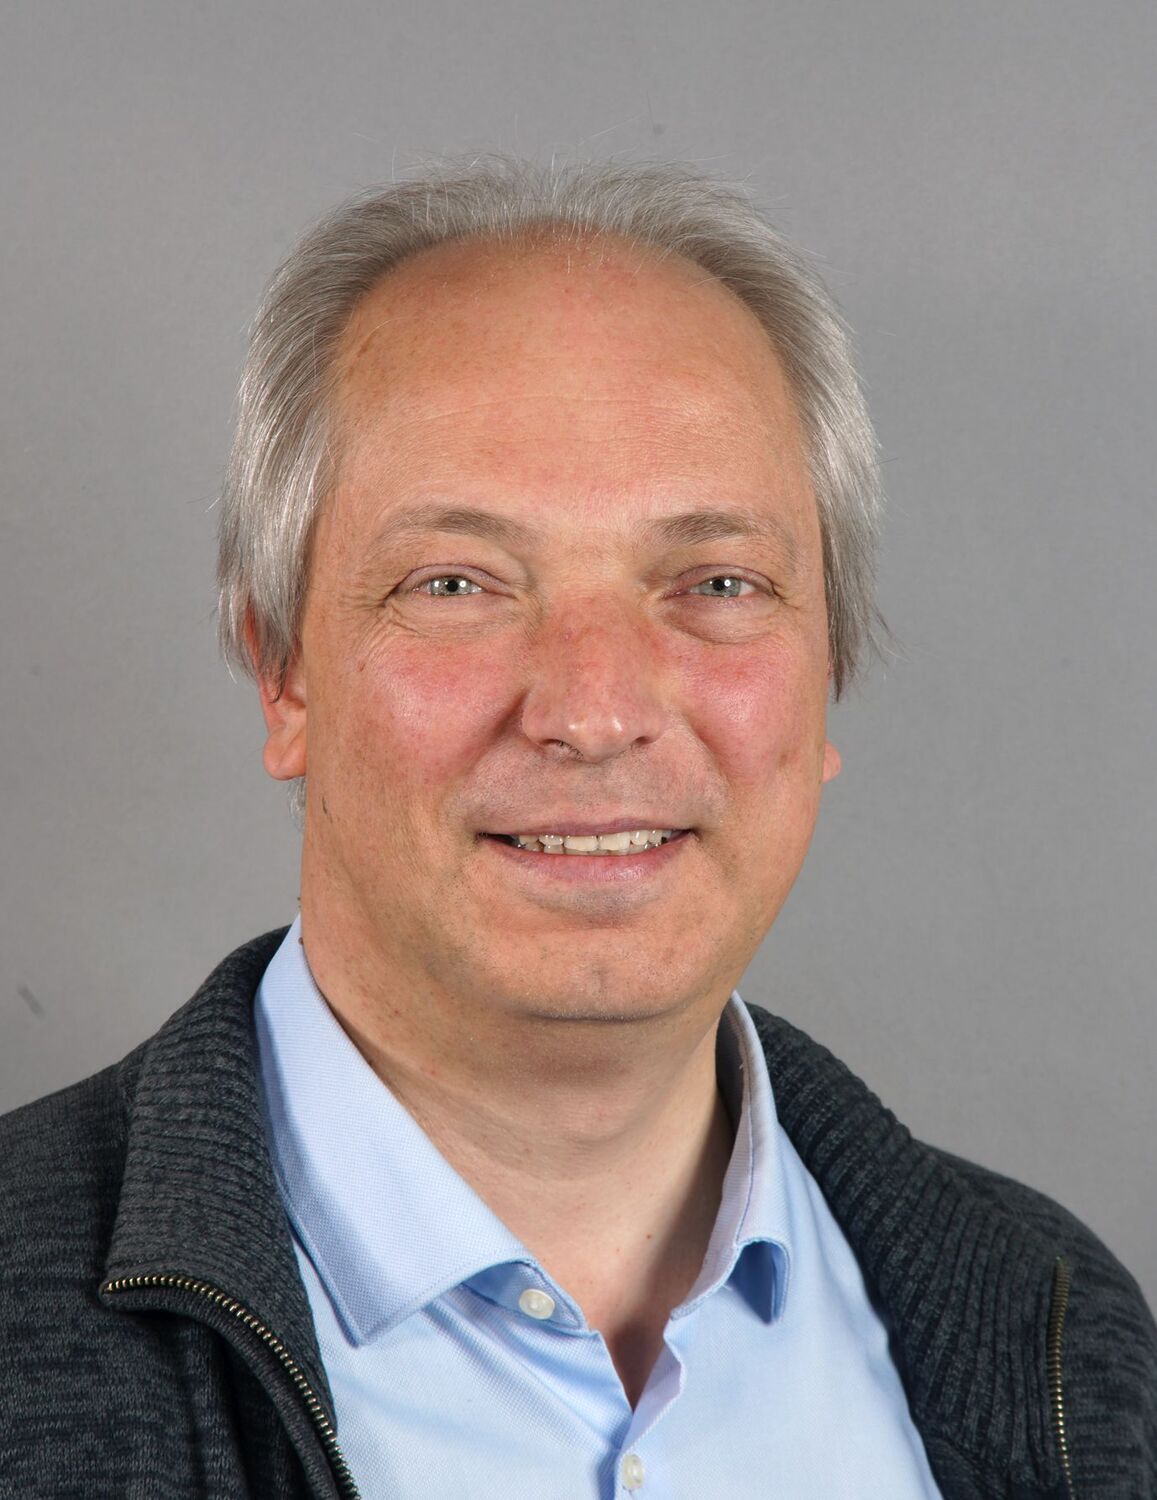 Research lead, Professor Gernot Arp